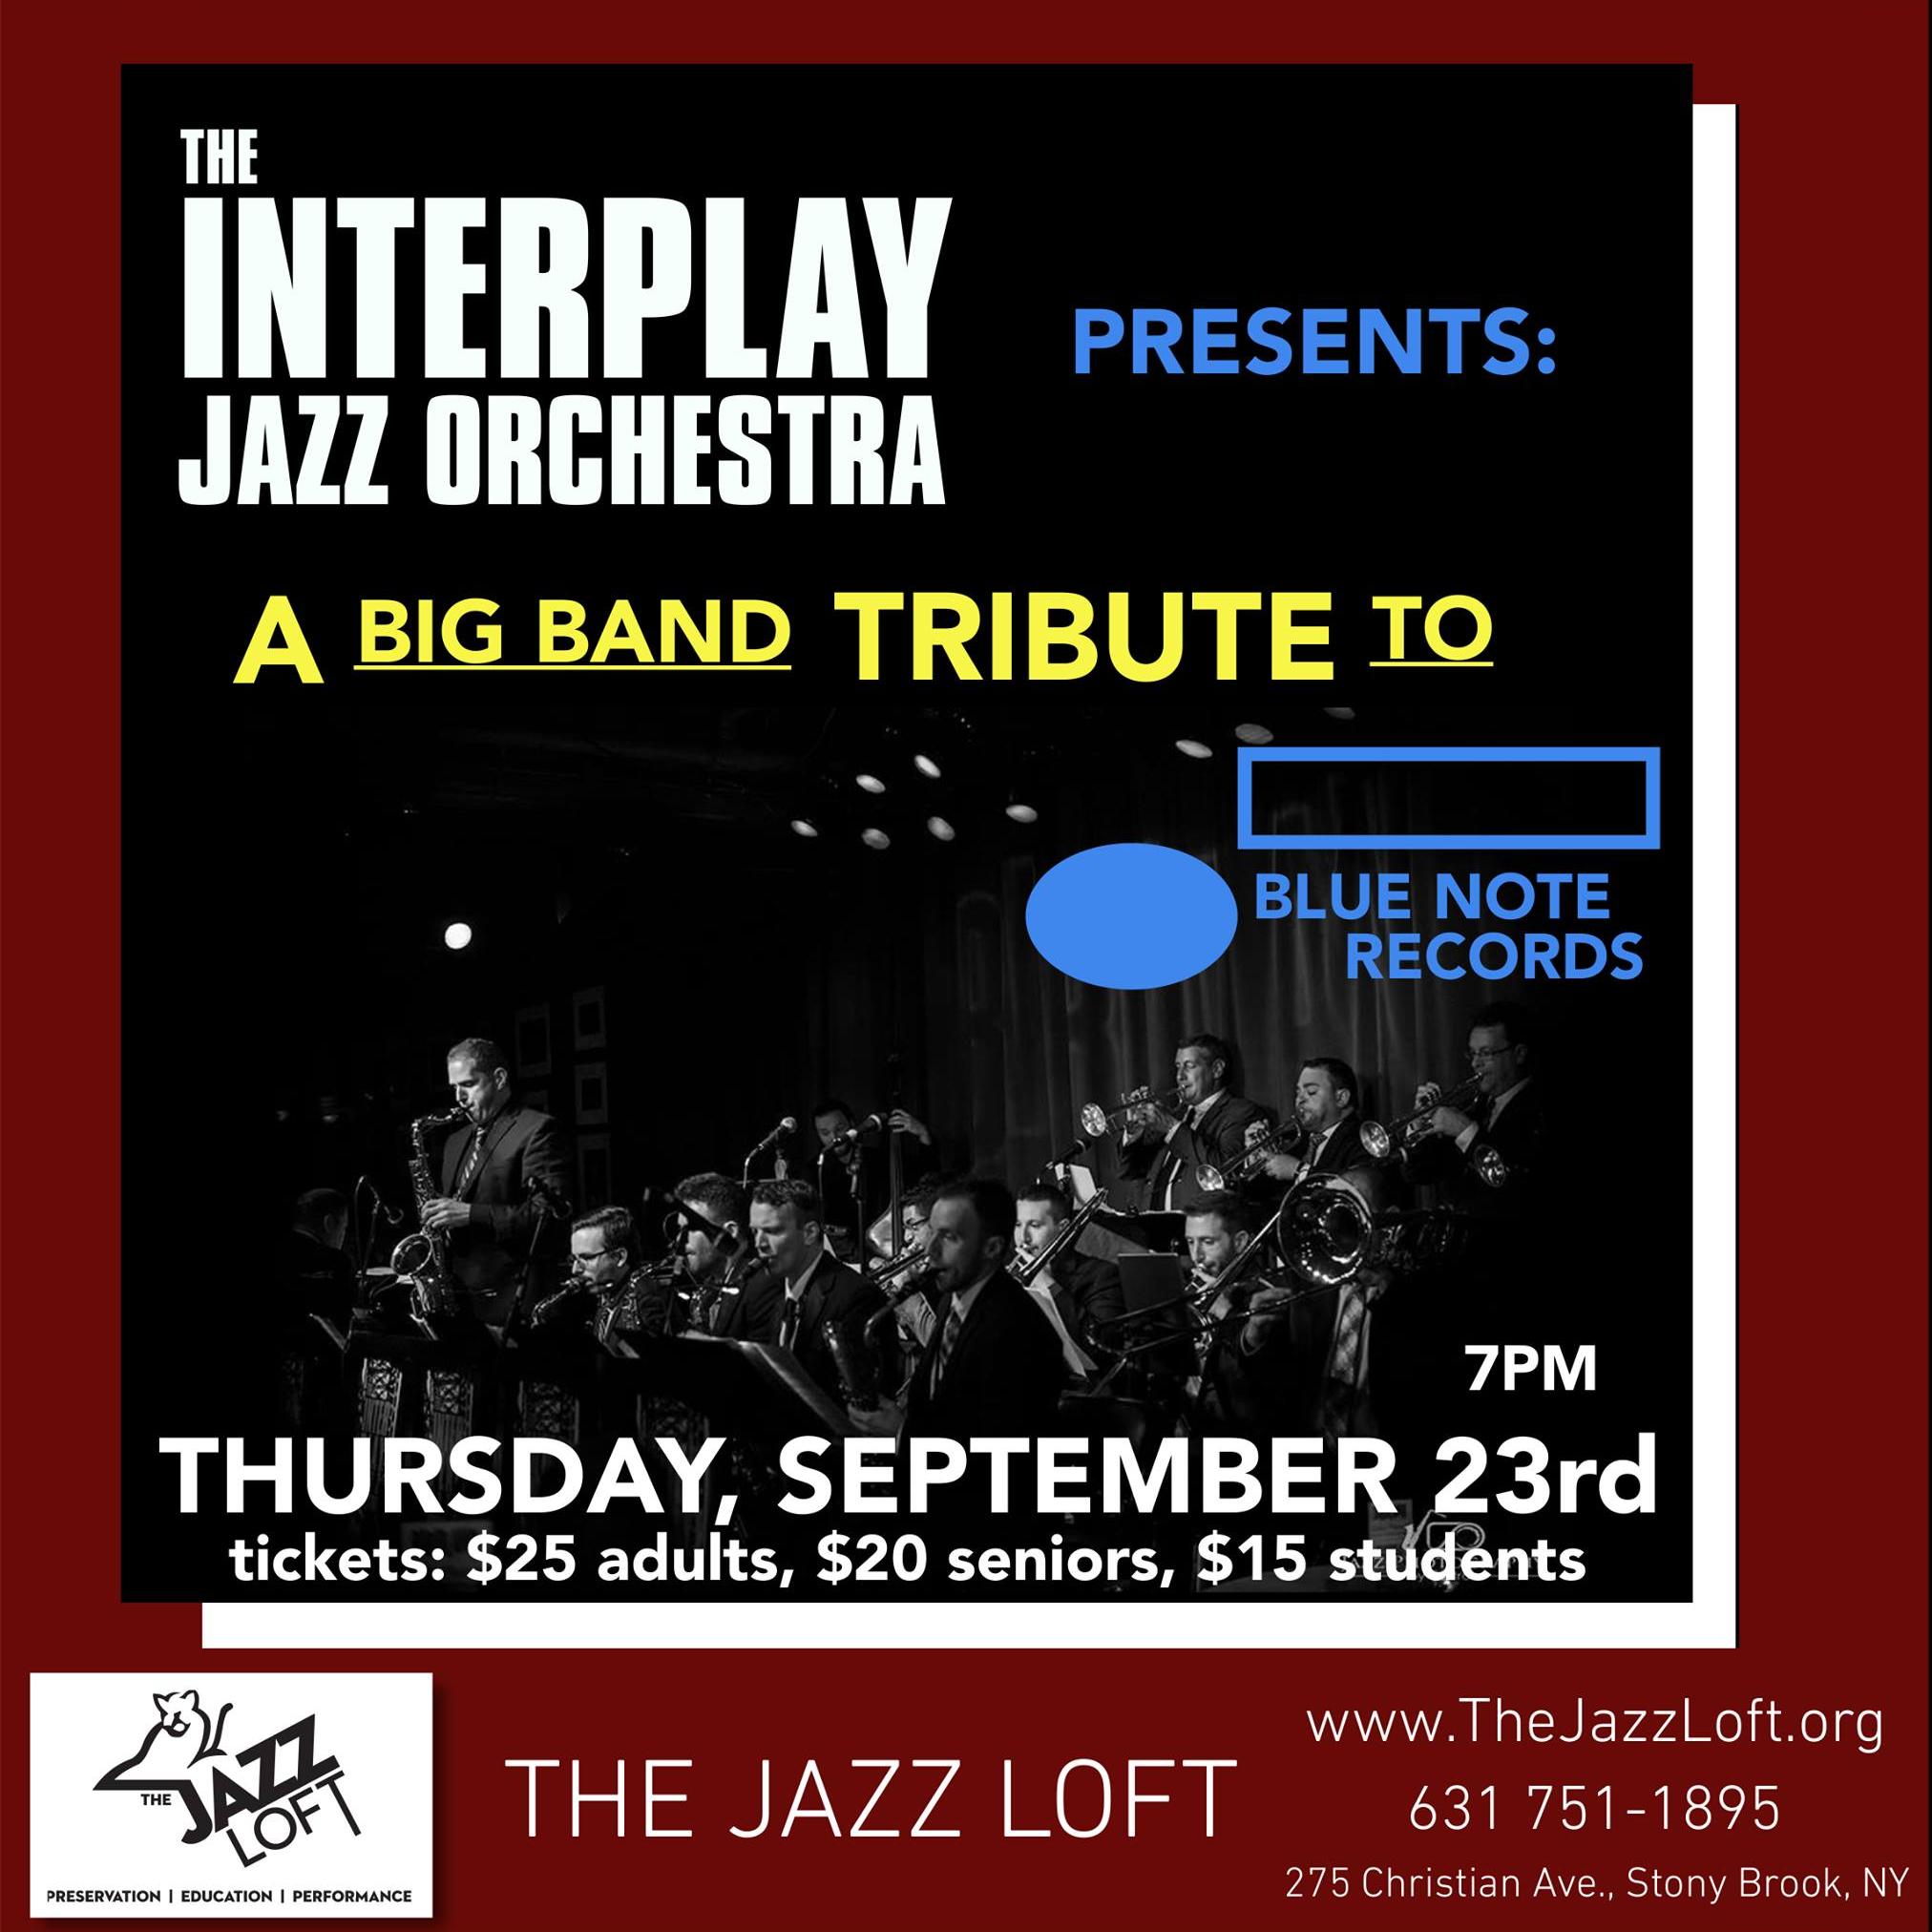 The Interplay Jazz Orchestra